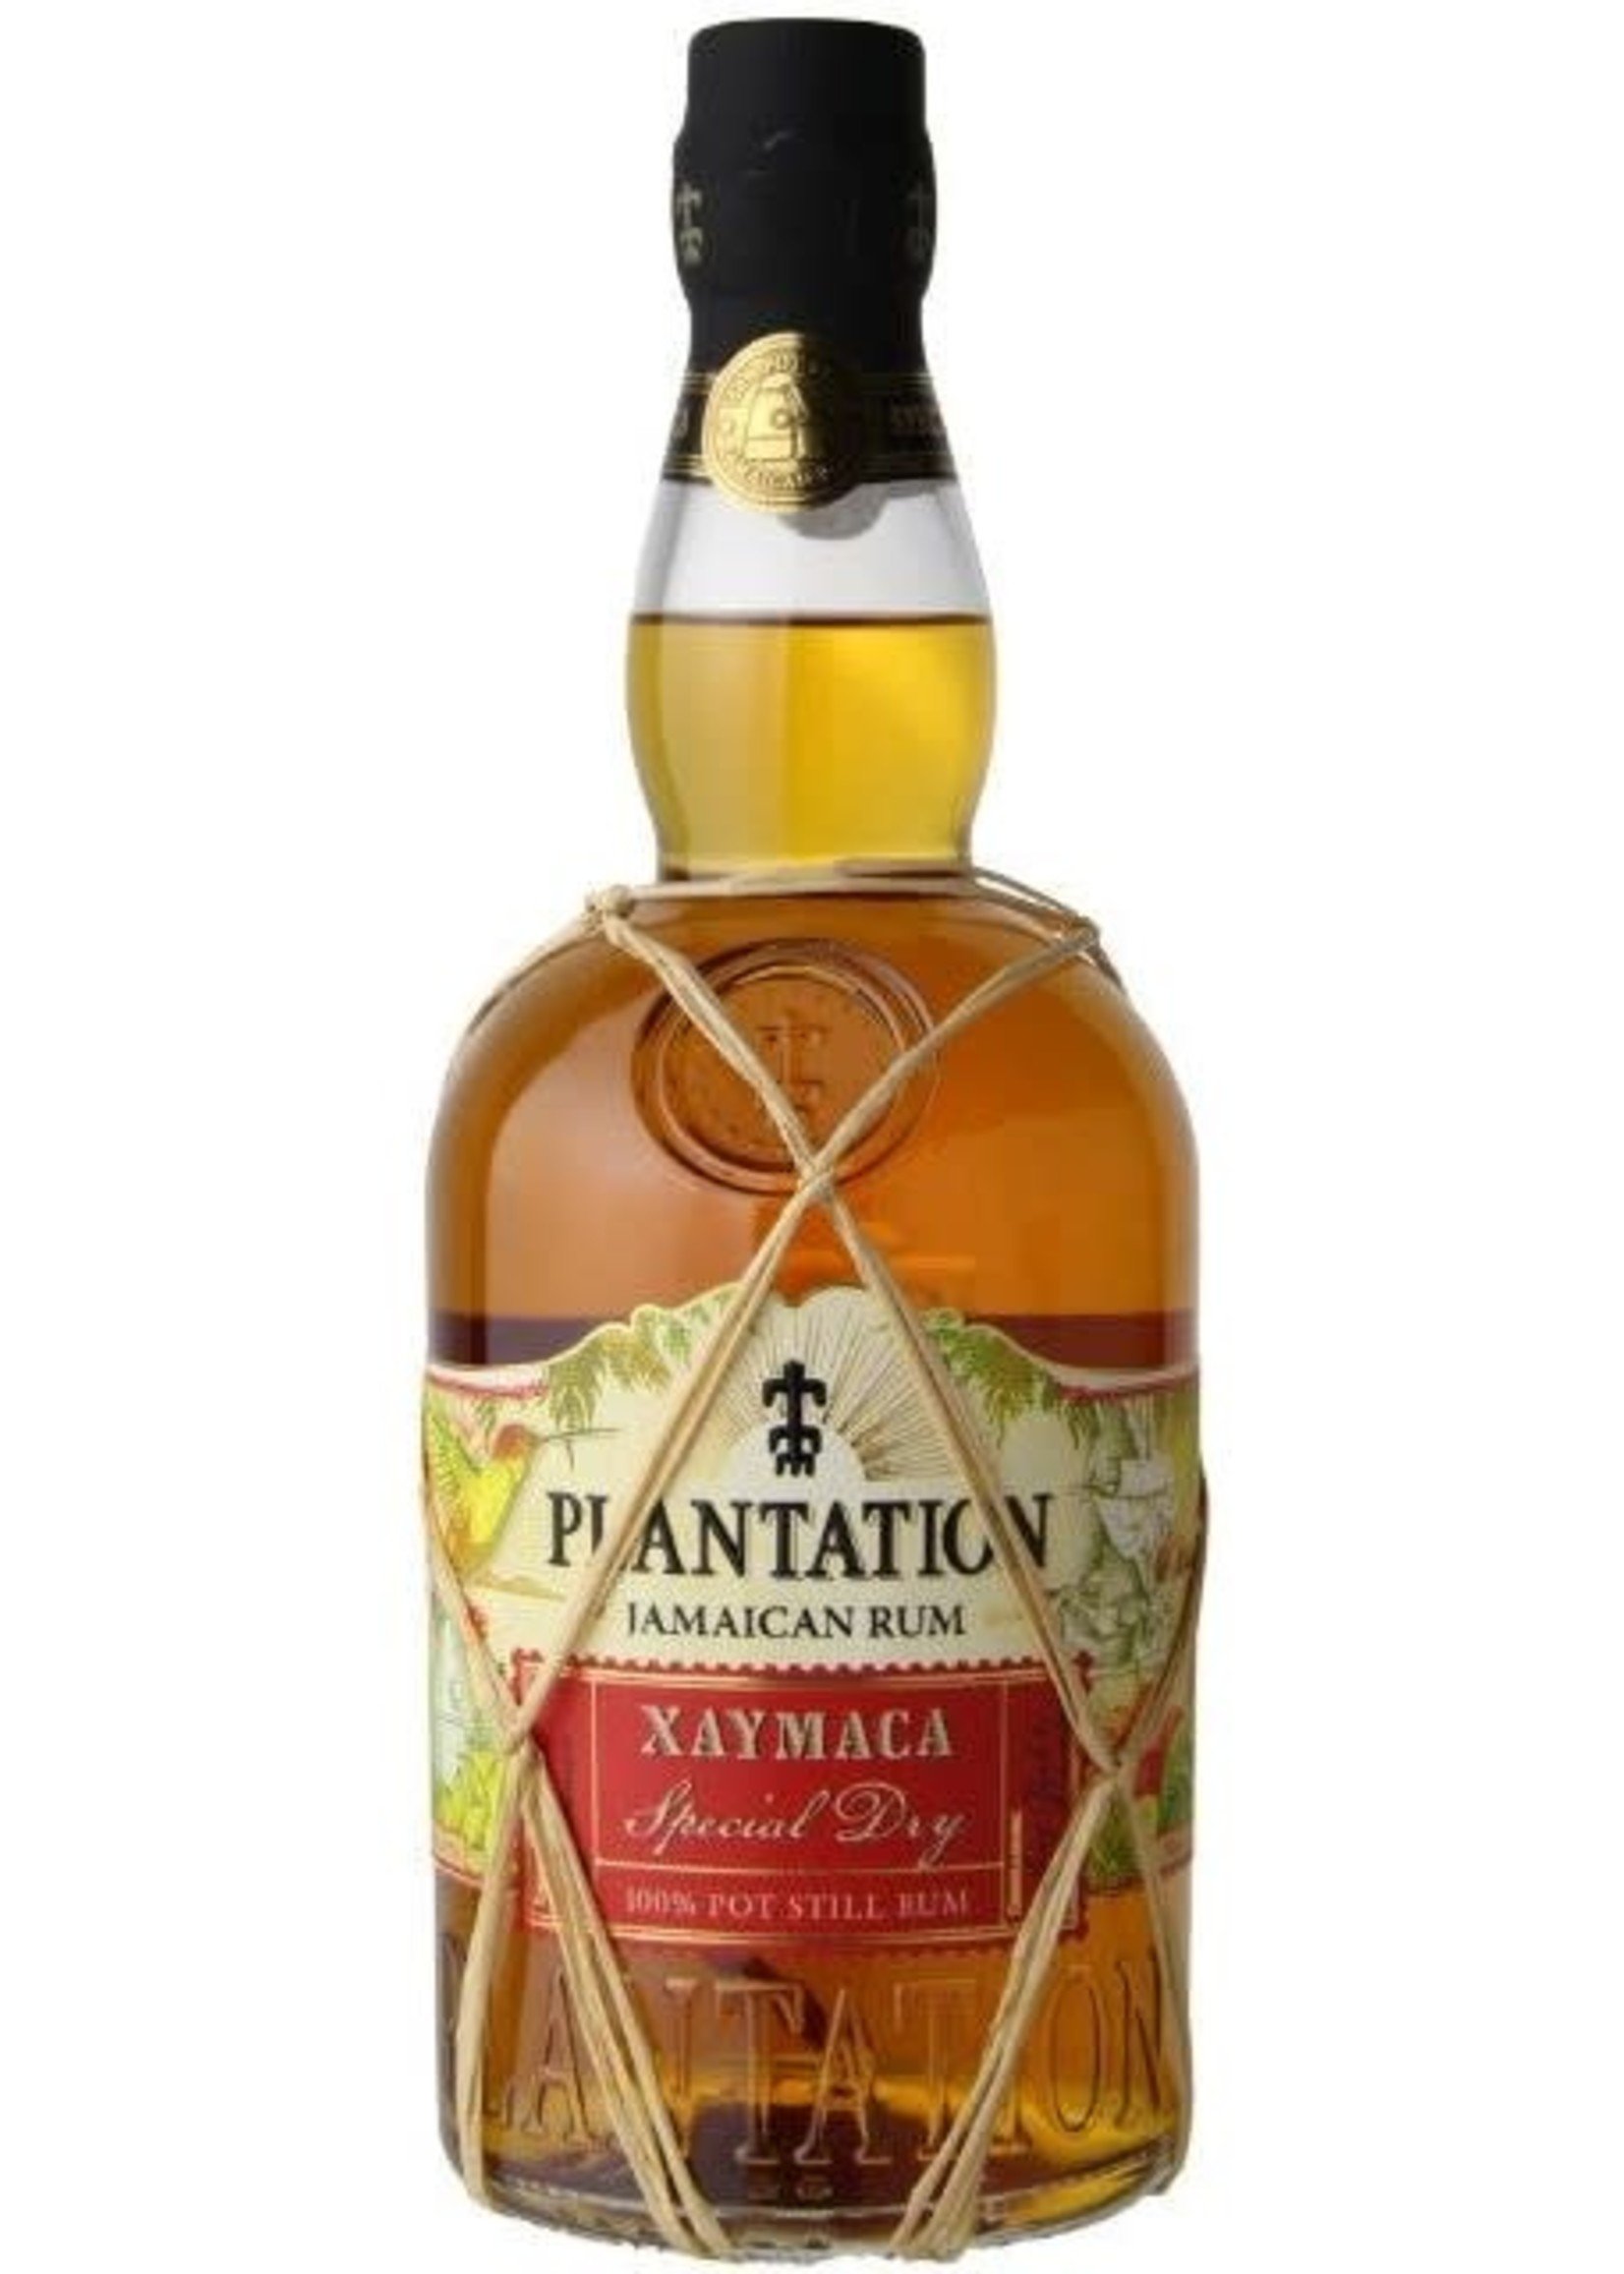 https://cdn.shoplightspeed.com/shops/645824/files/49927972/1652x2313x2/plantation-plantation-rum-xaymaca-special-dry-rum.jpg